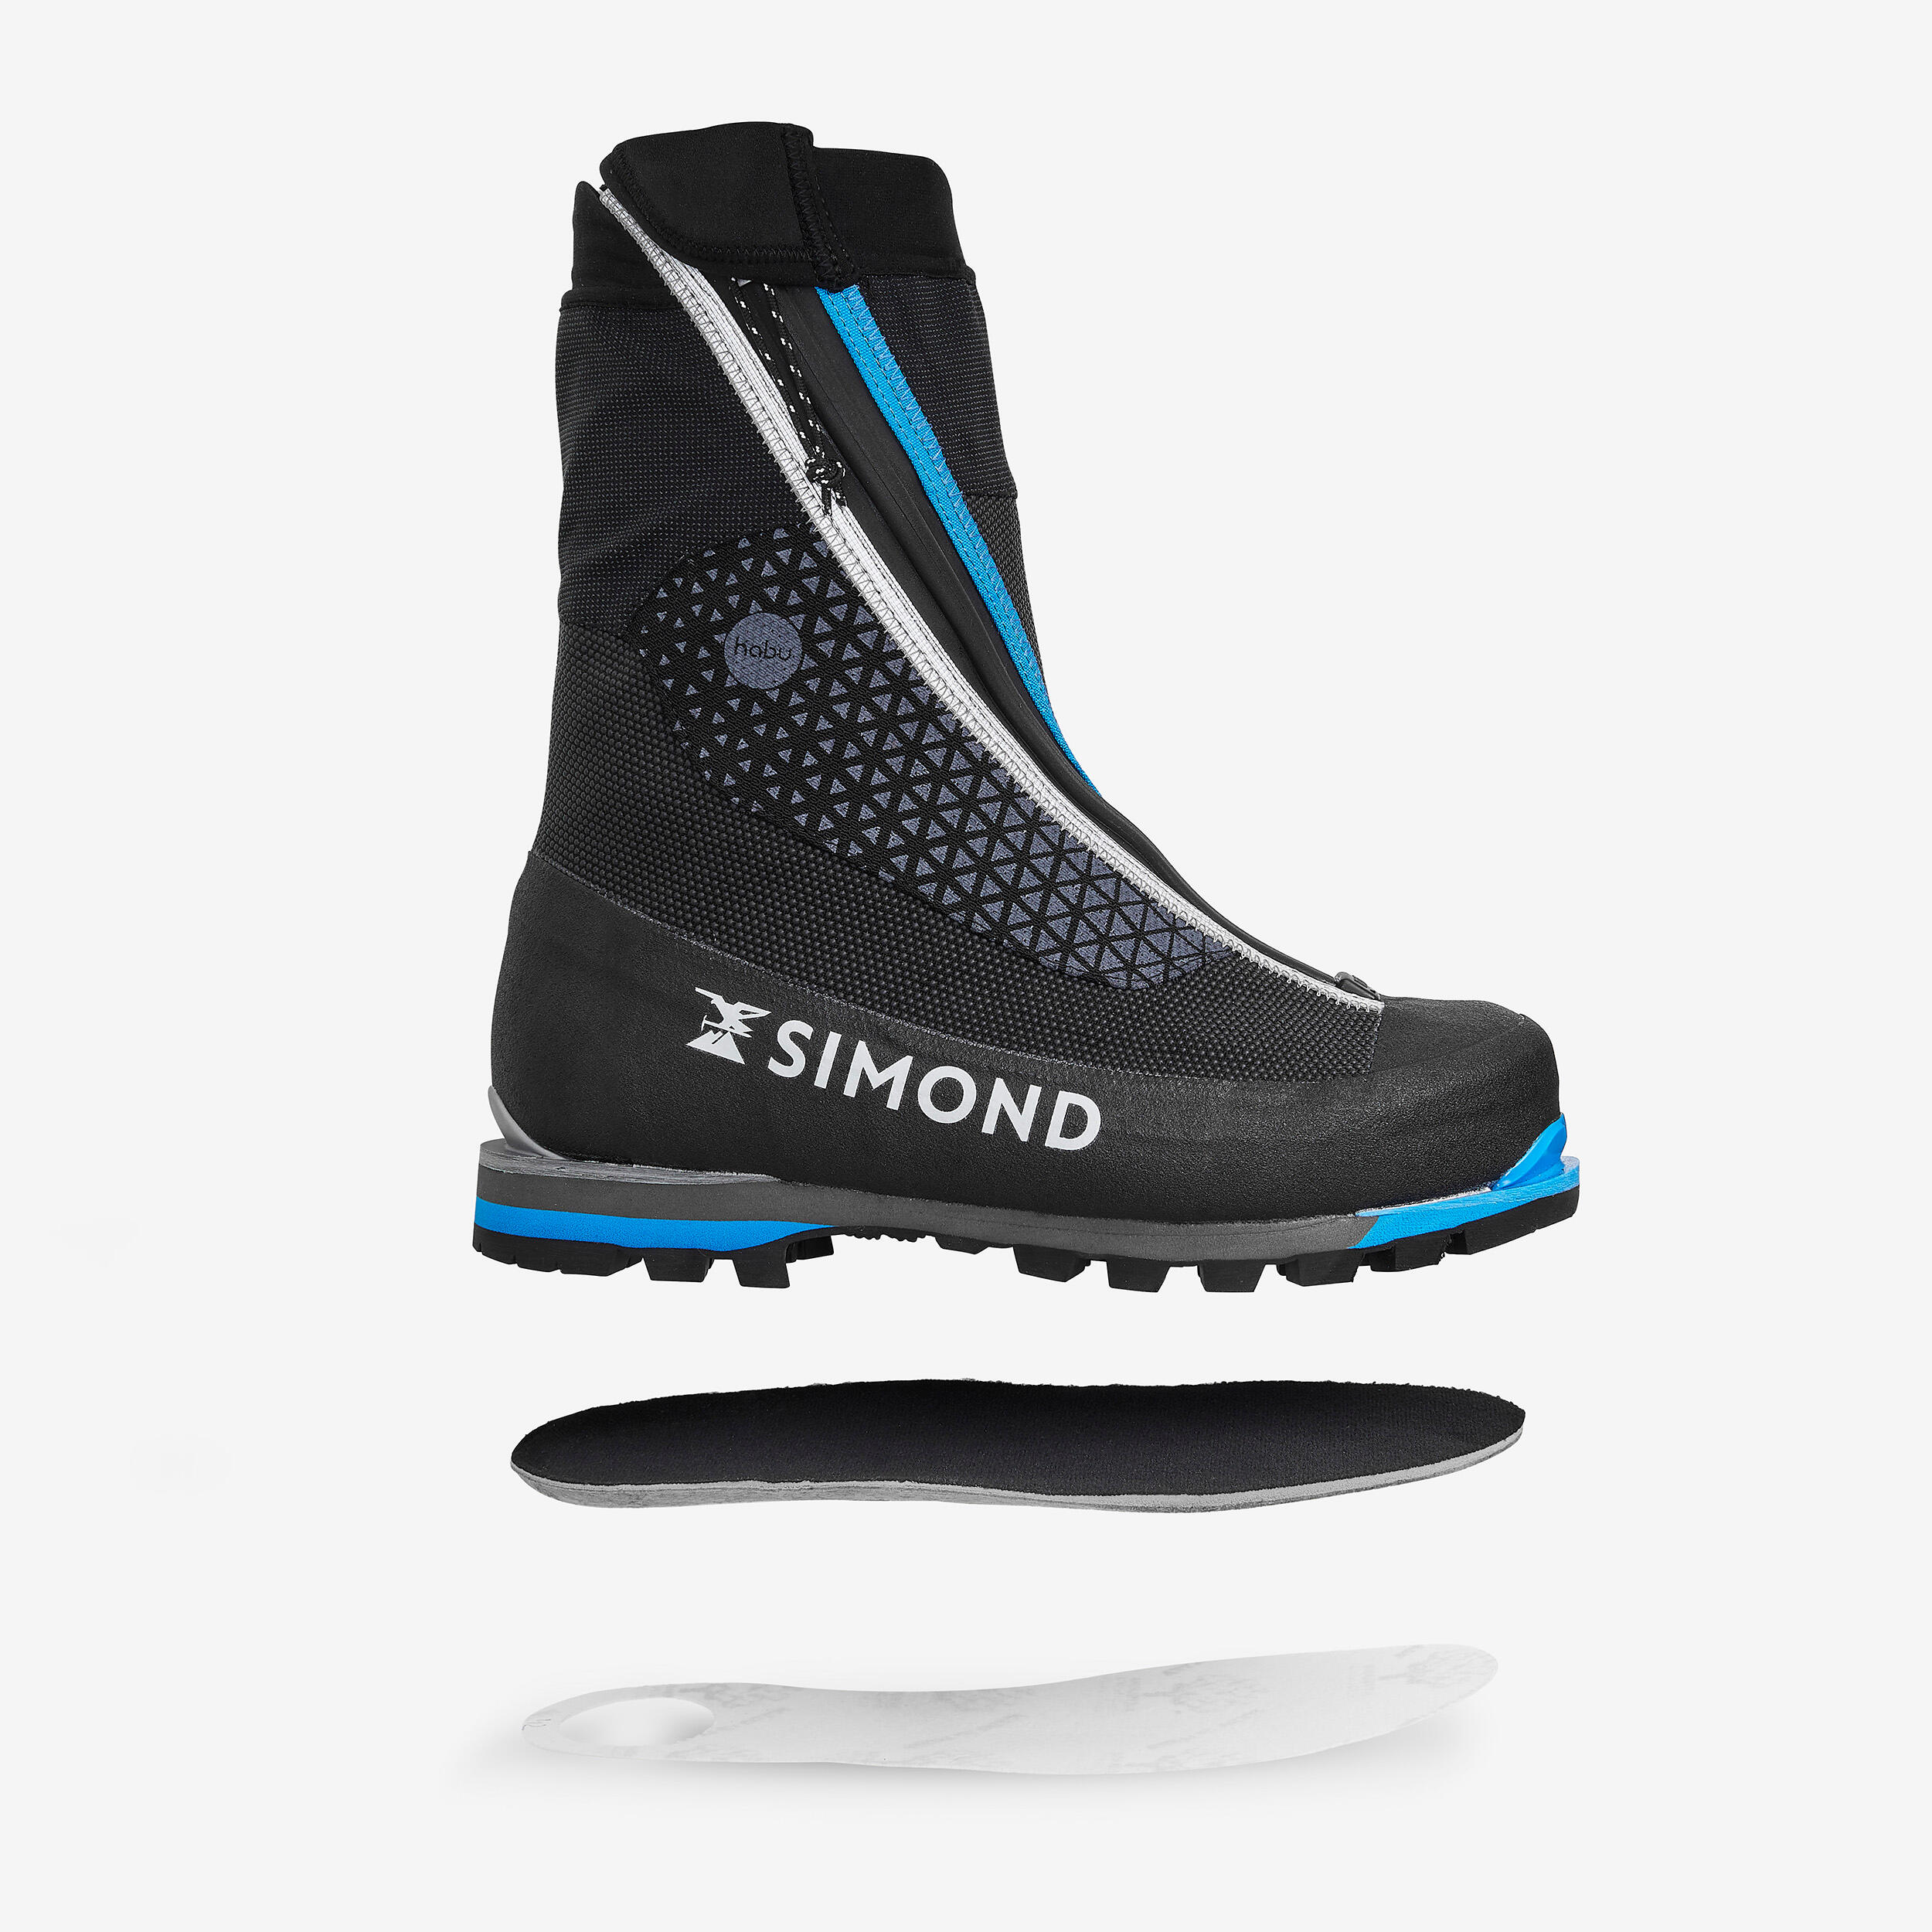 All-season mountaineering boots - ICE Blue/Black 5/12